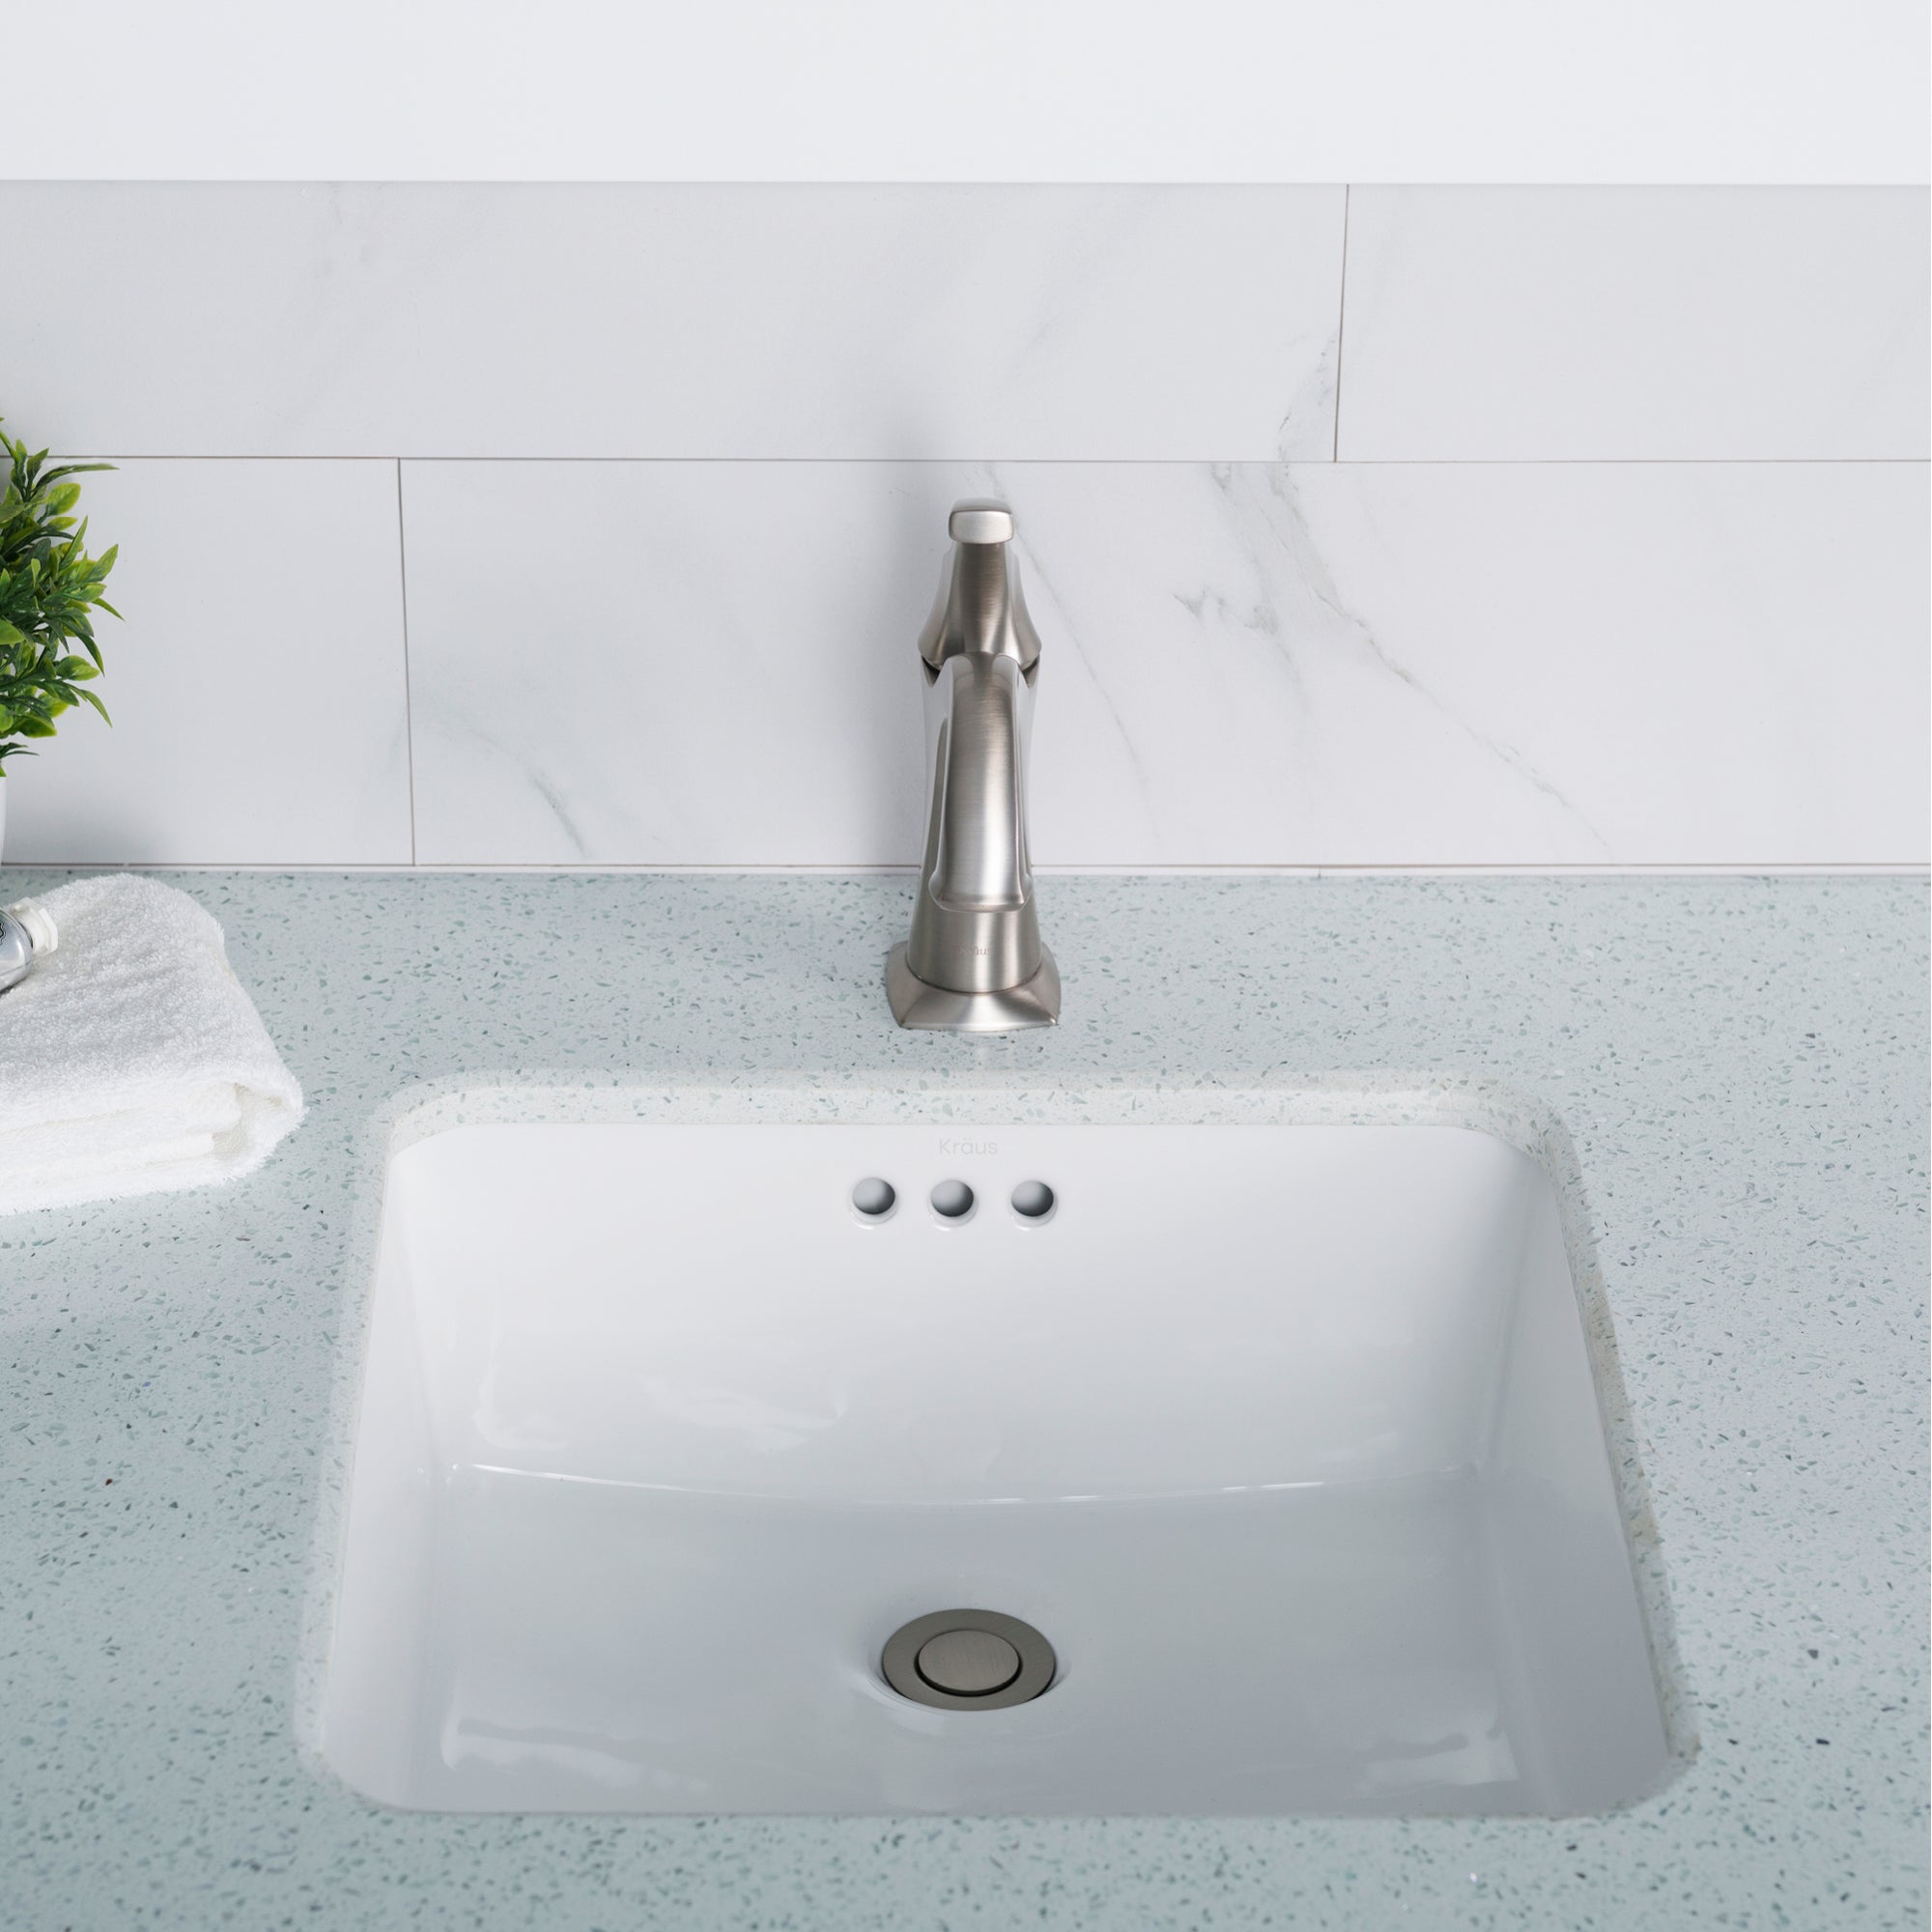 Kraus Elavo 17 in. Square Undermount Porcelain Ceramic Bathroom Sink with Overflow